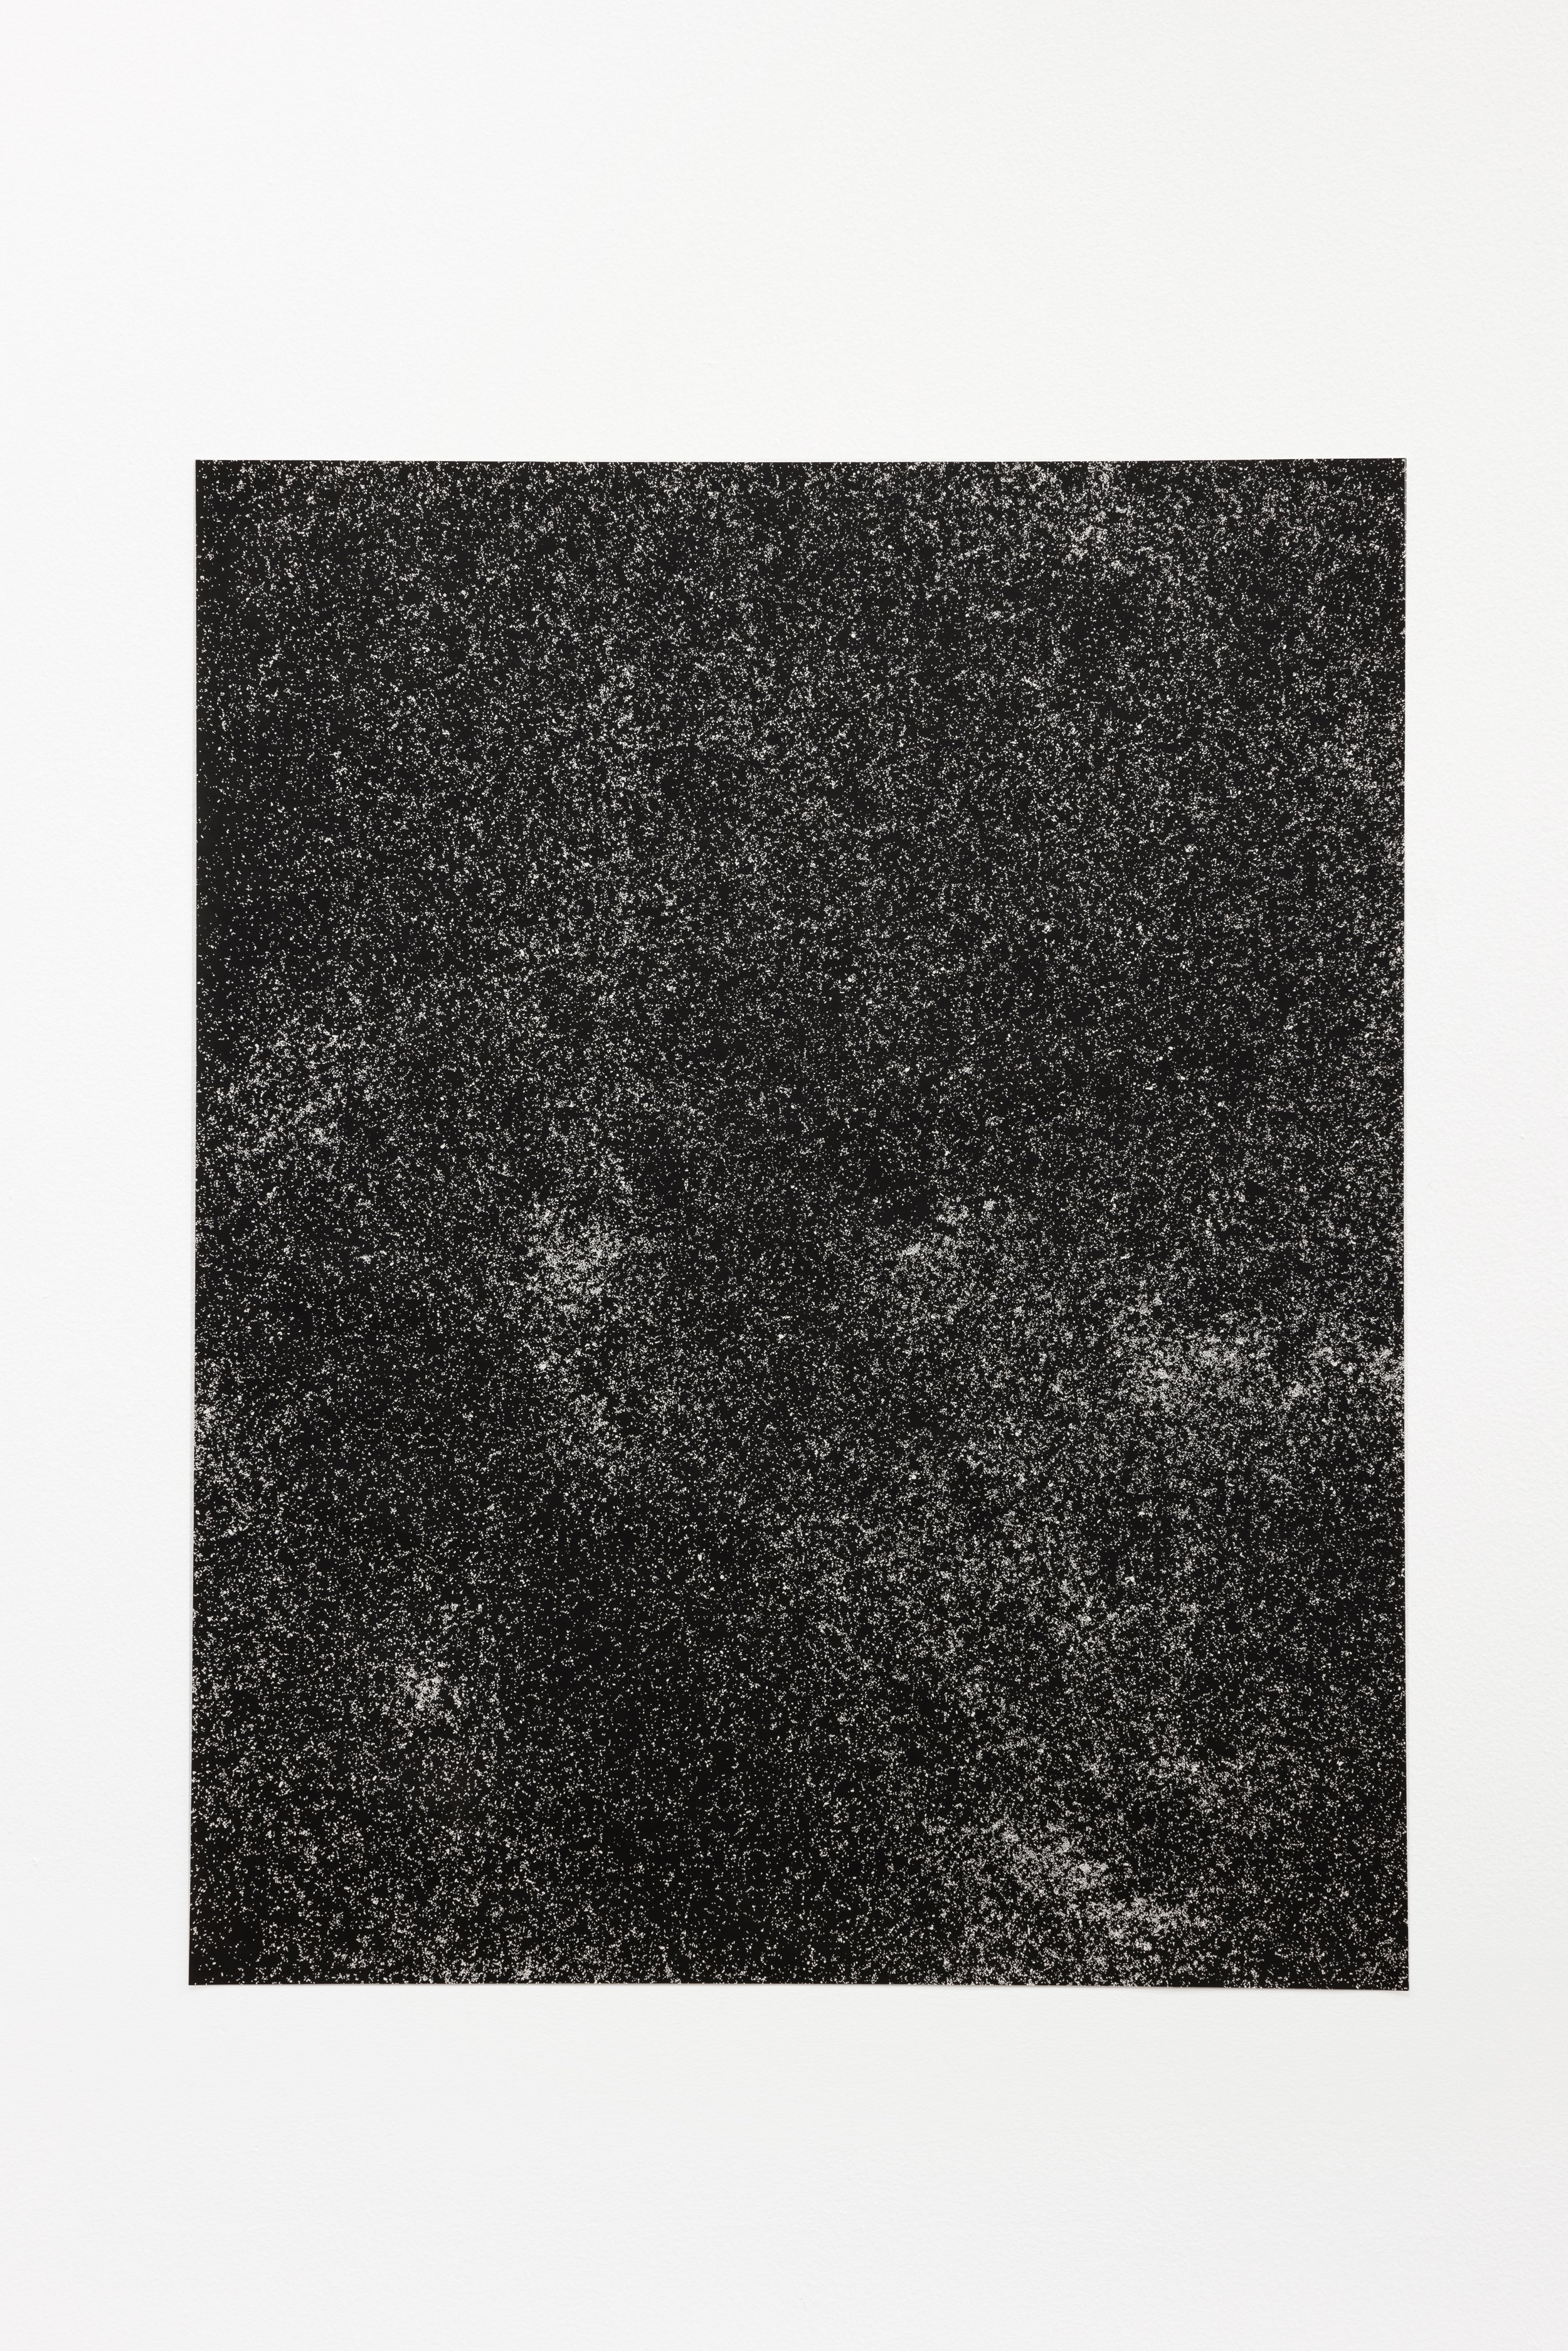  Etruscan Sand IX, 2021, silver gelatin print, 95.5 x 76 cm, fotogram, unique   